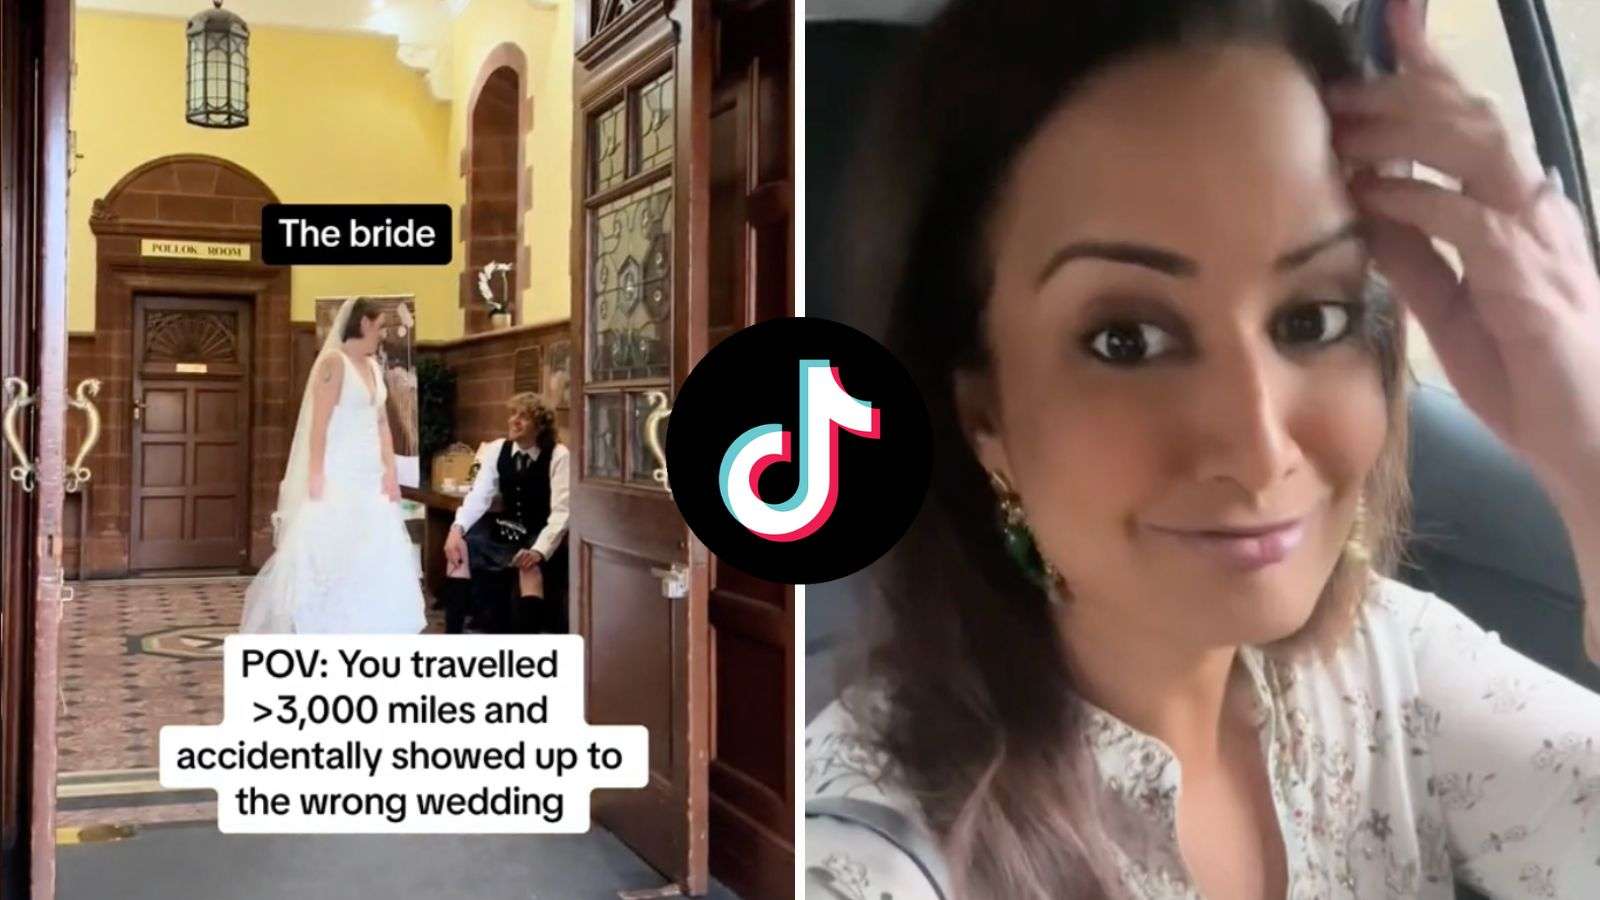 Woman attends wrong wedding